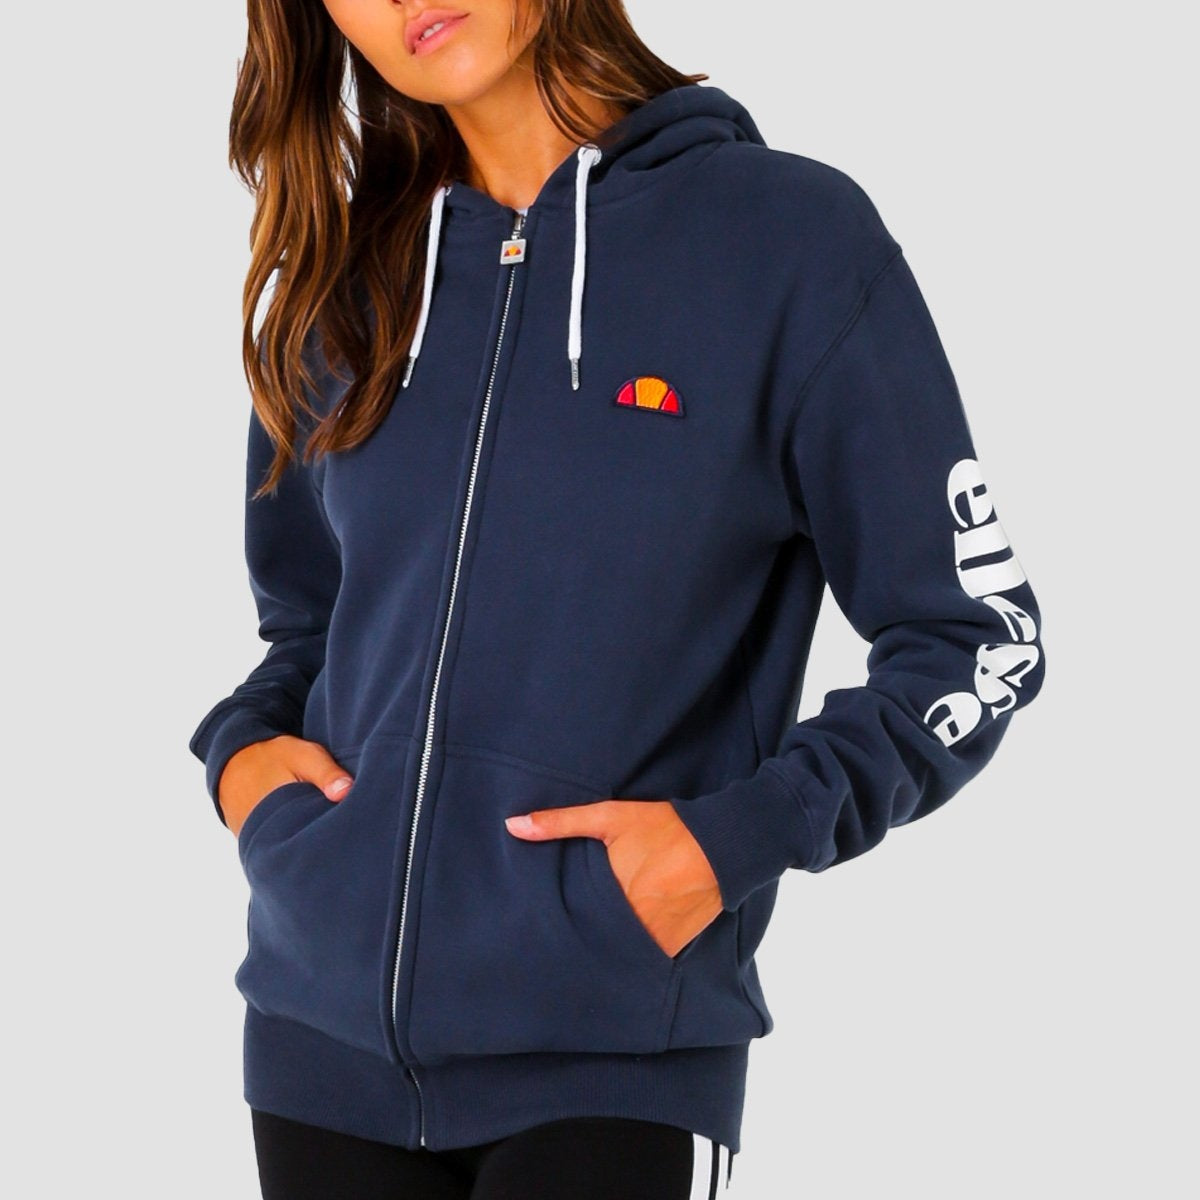 womens navy hoodie uk